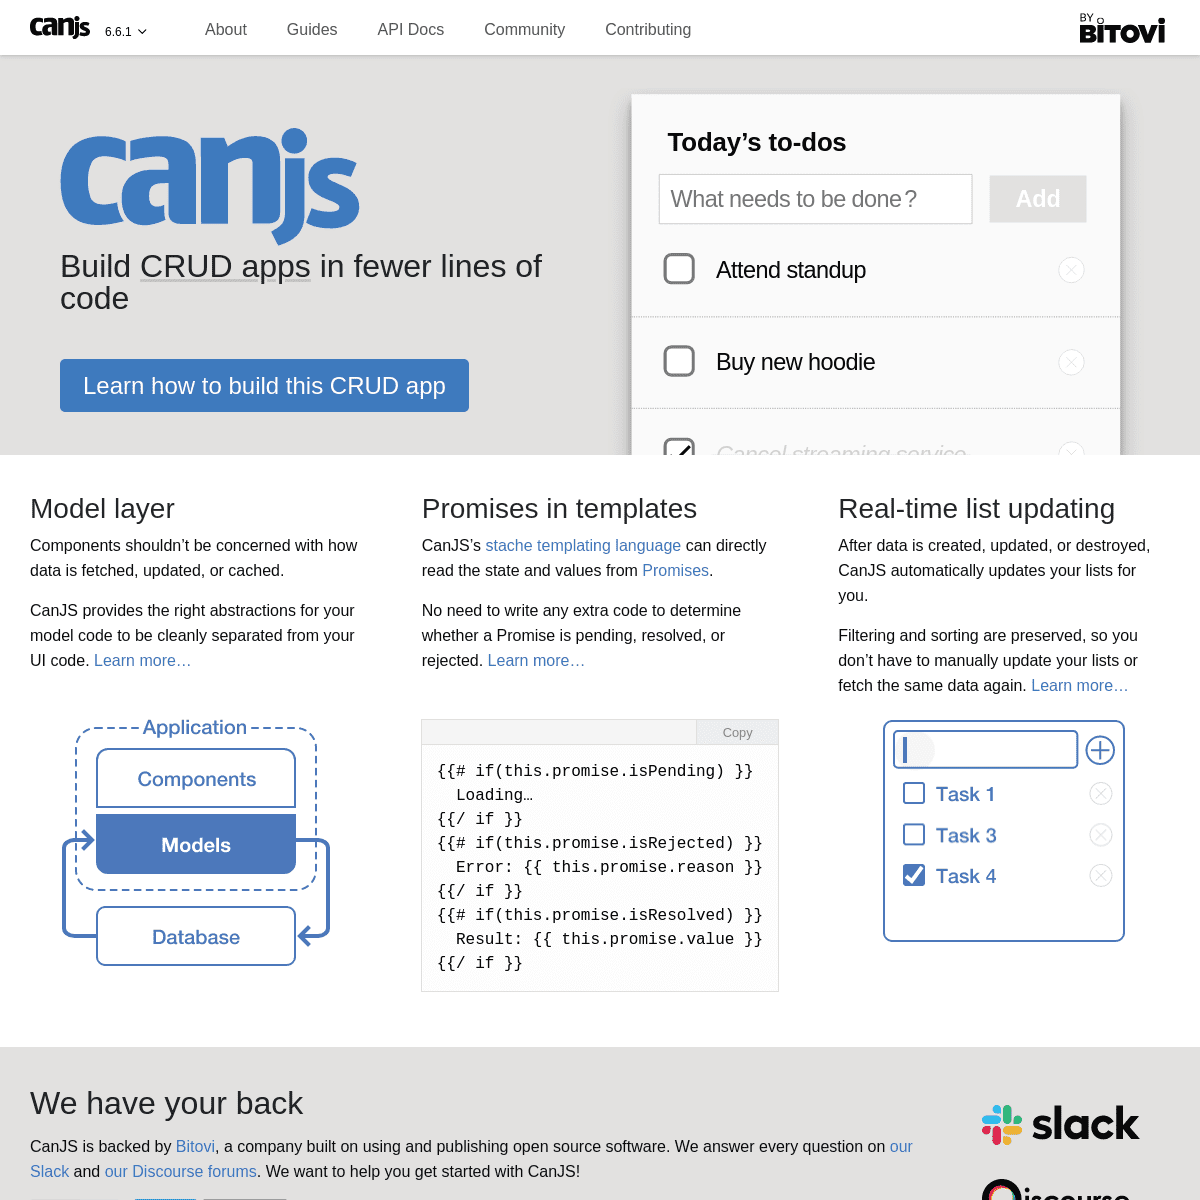 A complete backup of https://canjs.com